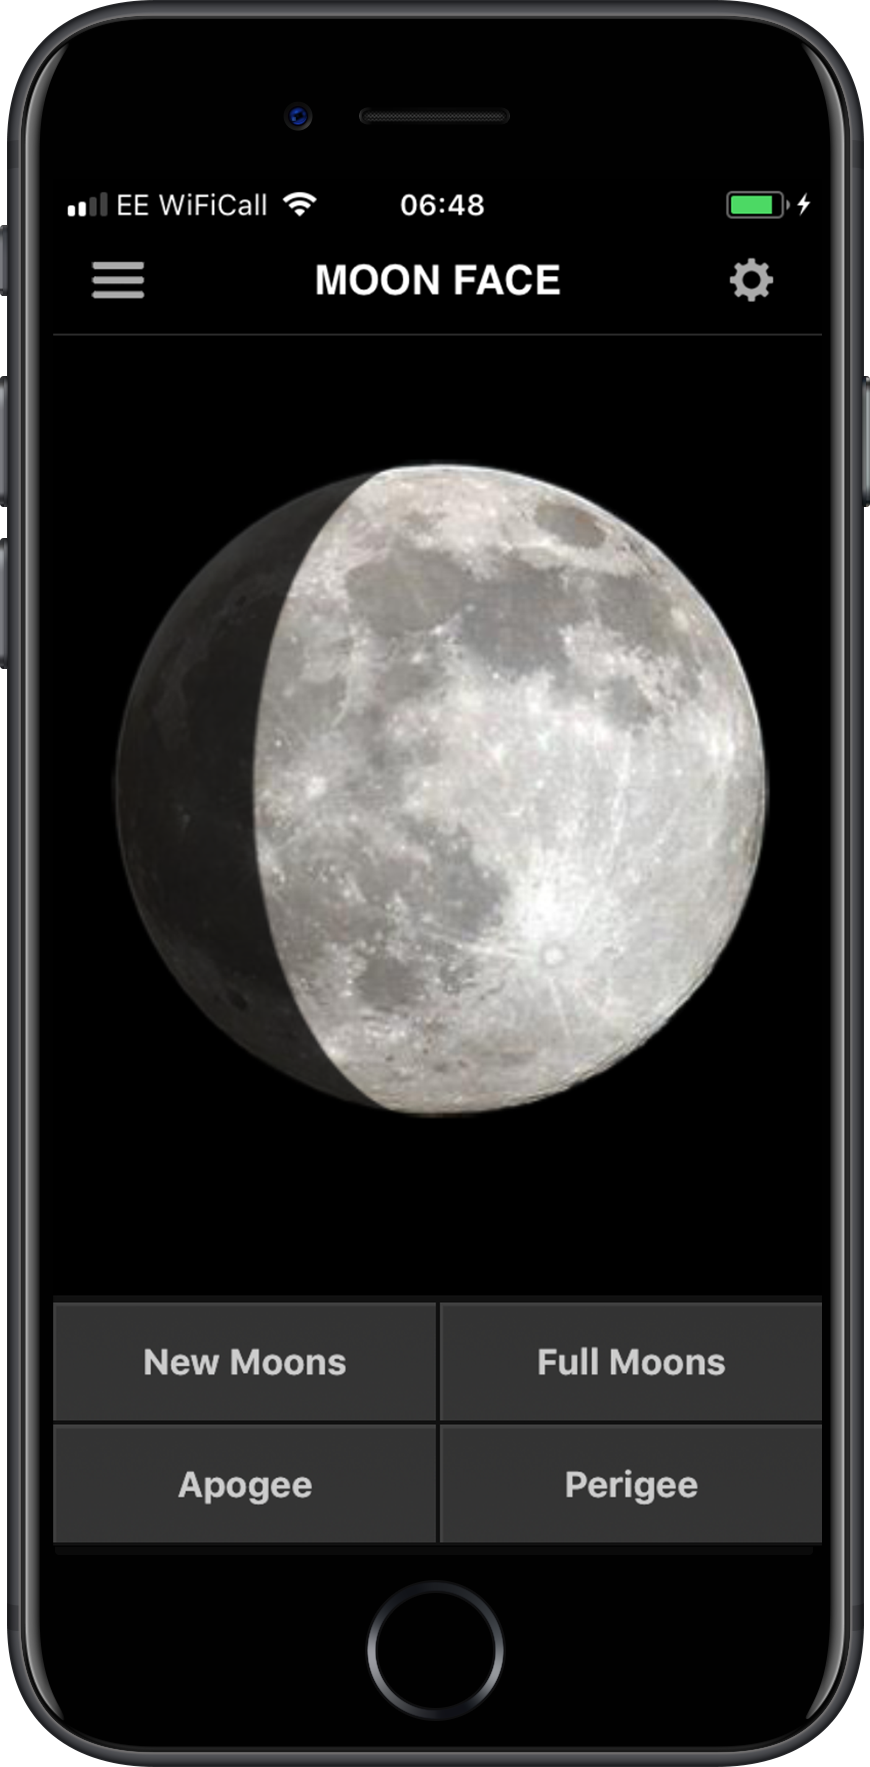 Moonface App On iPhone